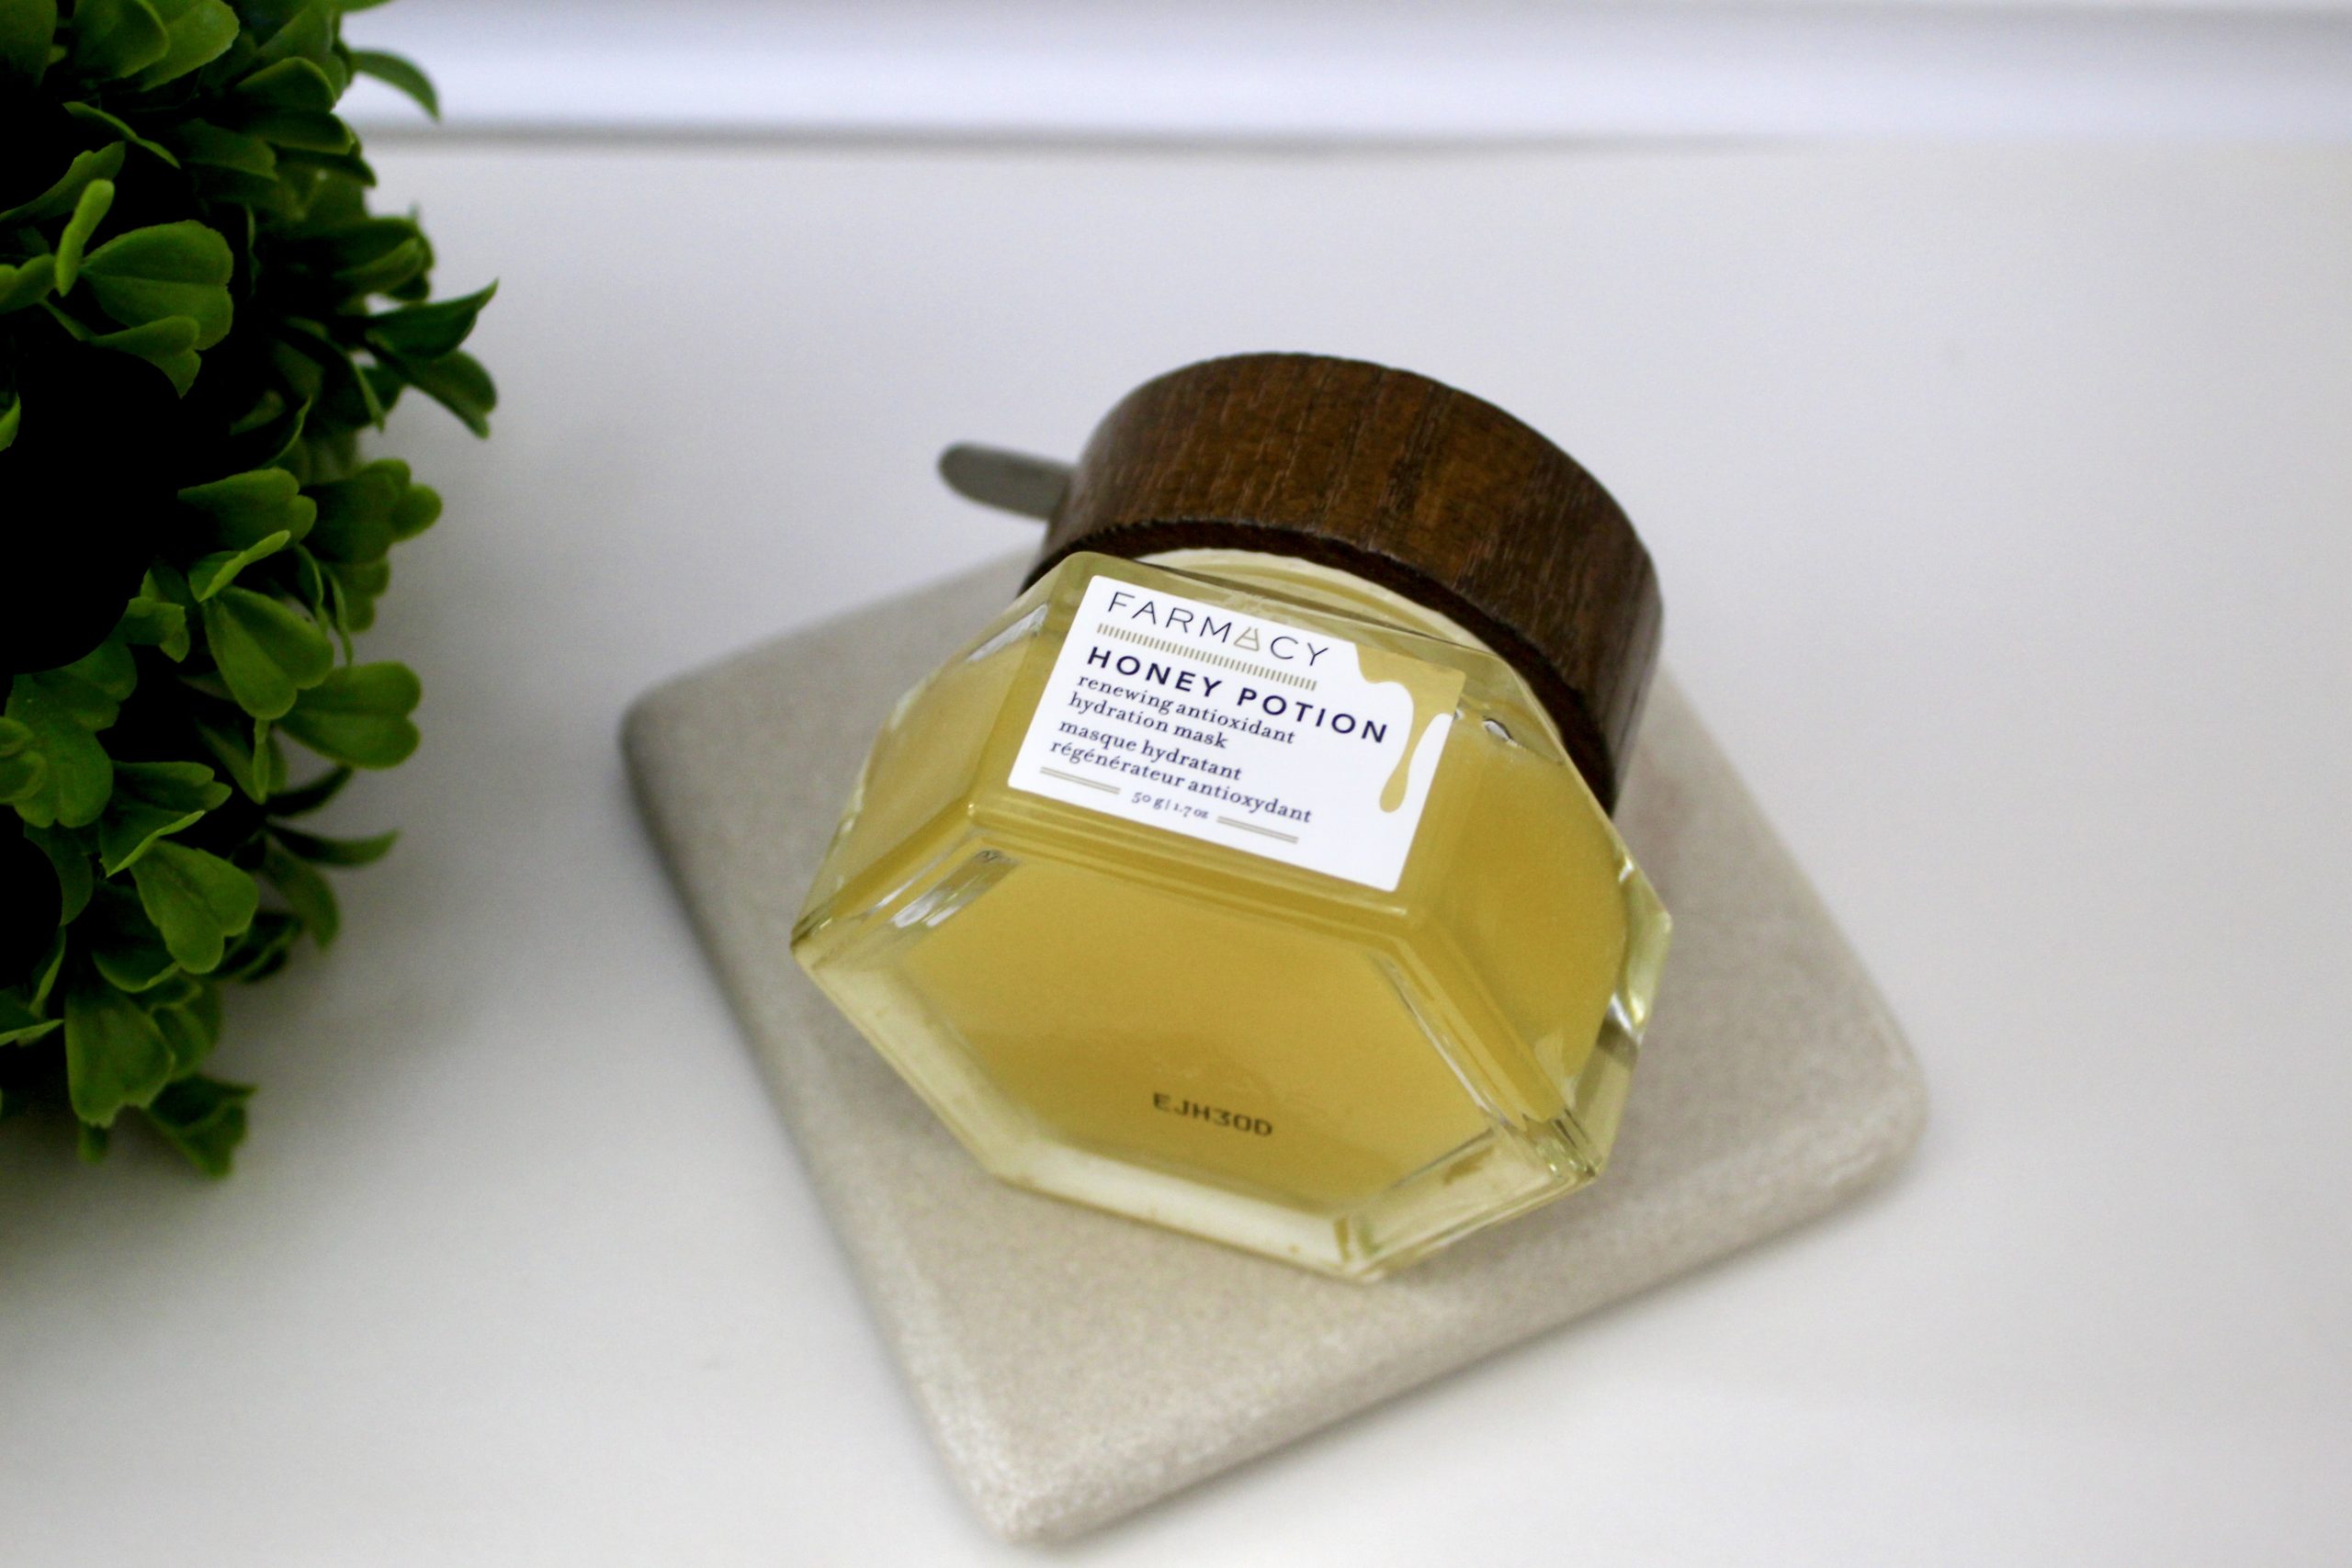 Farmacy honey potion renewing antioxidant hydration mask